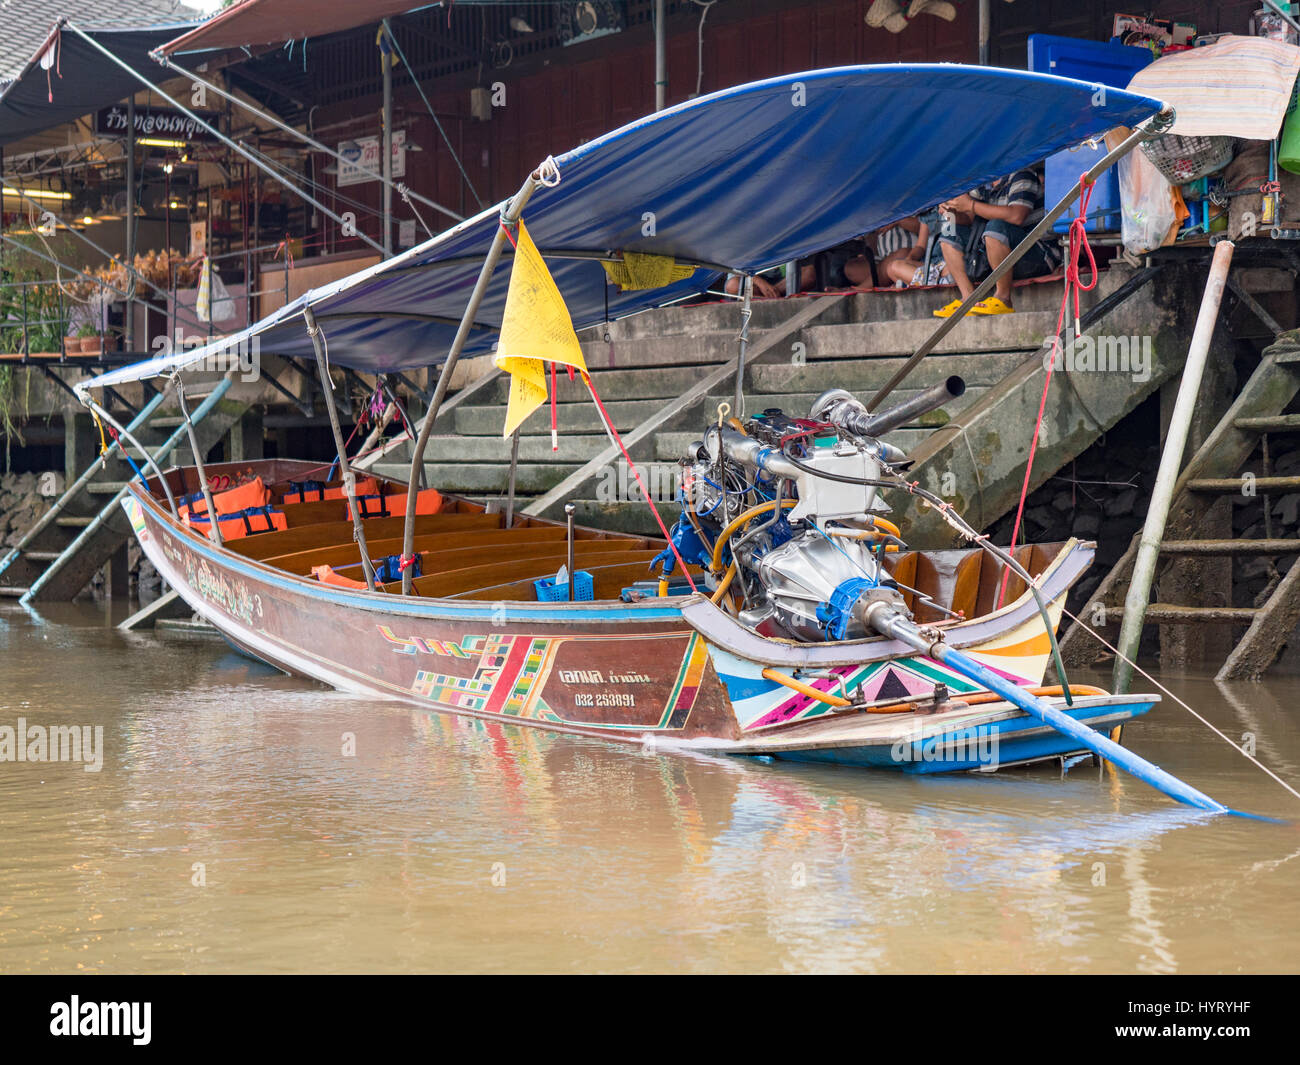 Sightseeing Boat Waiting For Passengers At Amphawa Floating Market